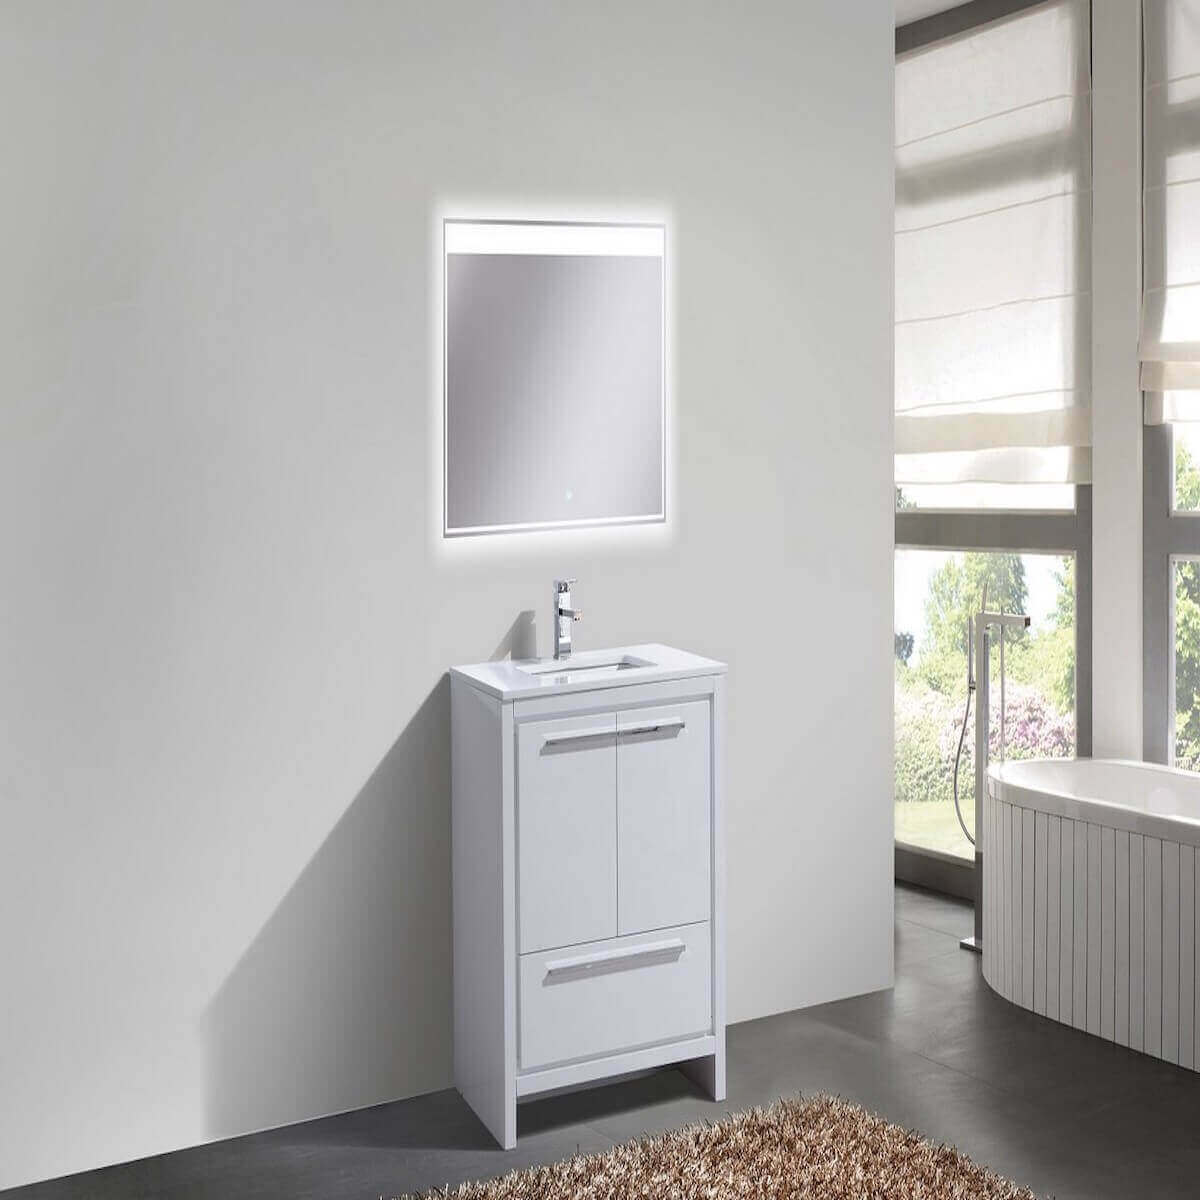 KubeBath Dolce 30” High Gloss White Freestanding Single Vanity with Quartz Countertop AD630GW in Bathroom #finish_high gloss white